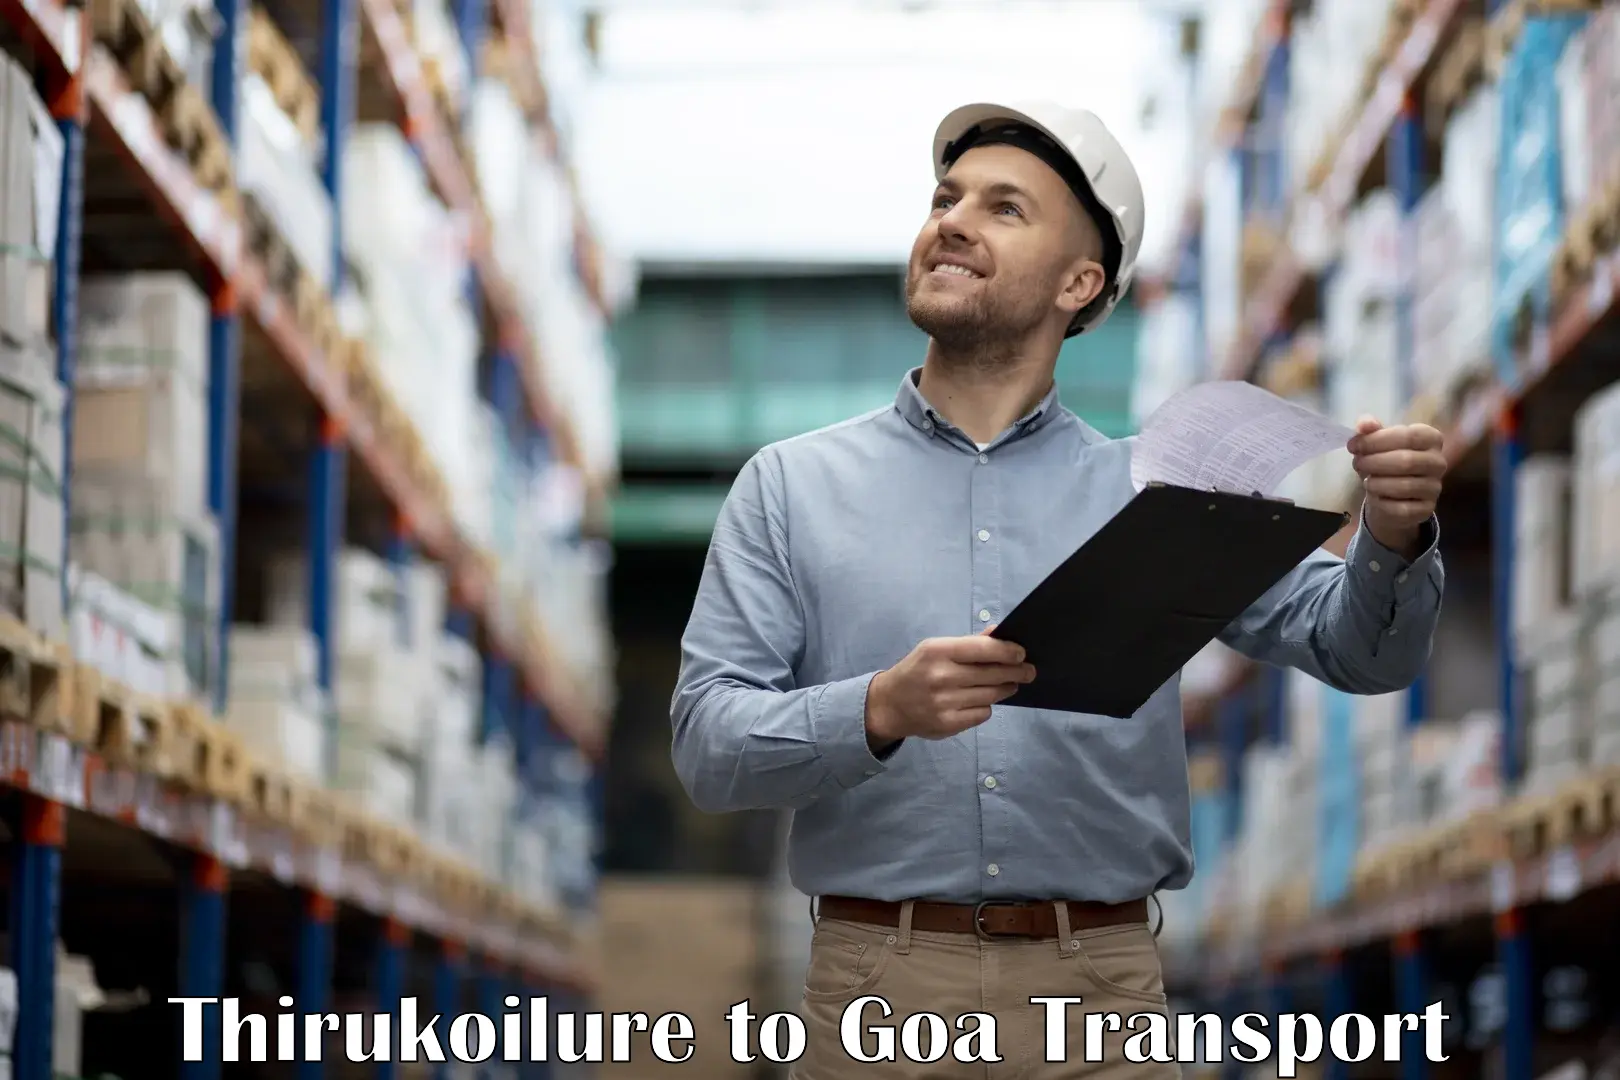 Daily transport service Thirukoilure to Goa